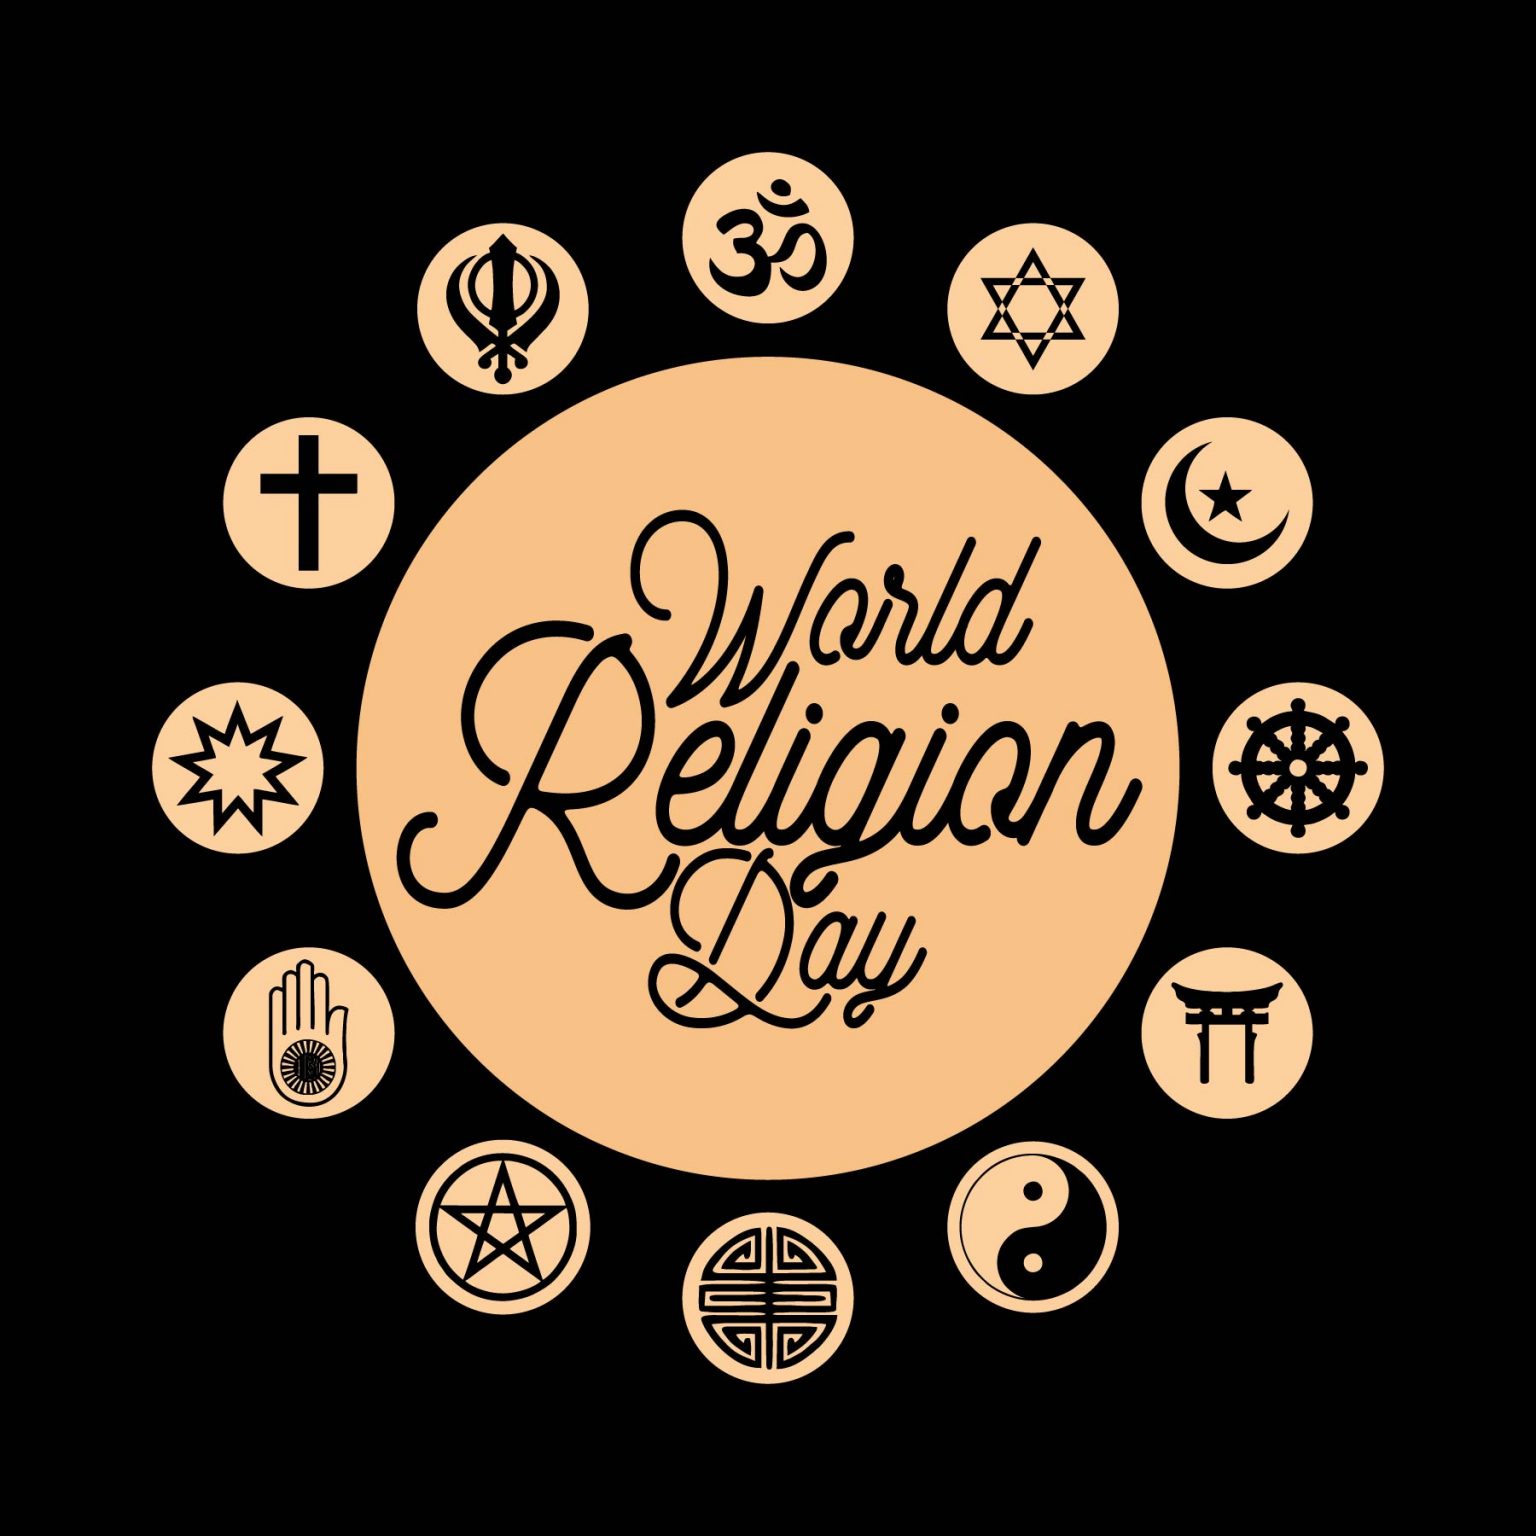 World Religion Day Template illustrationn for background free vector